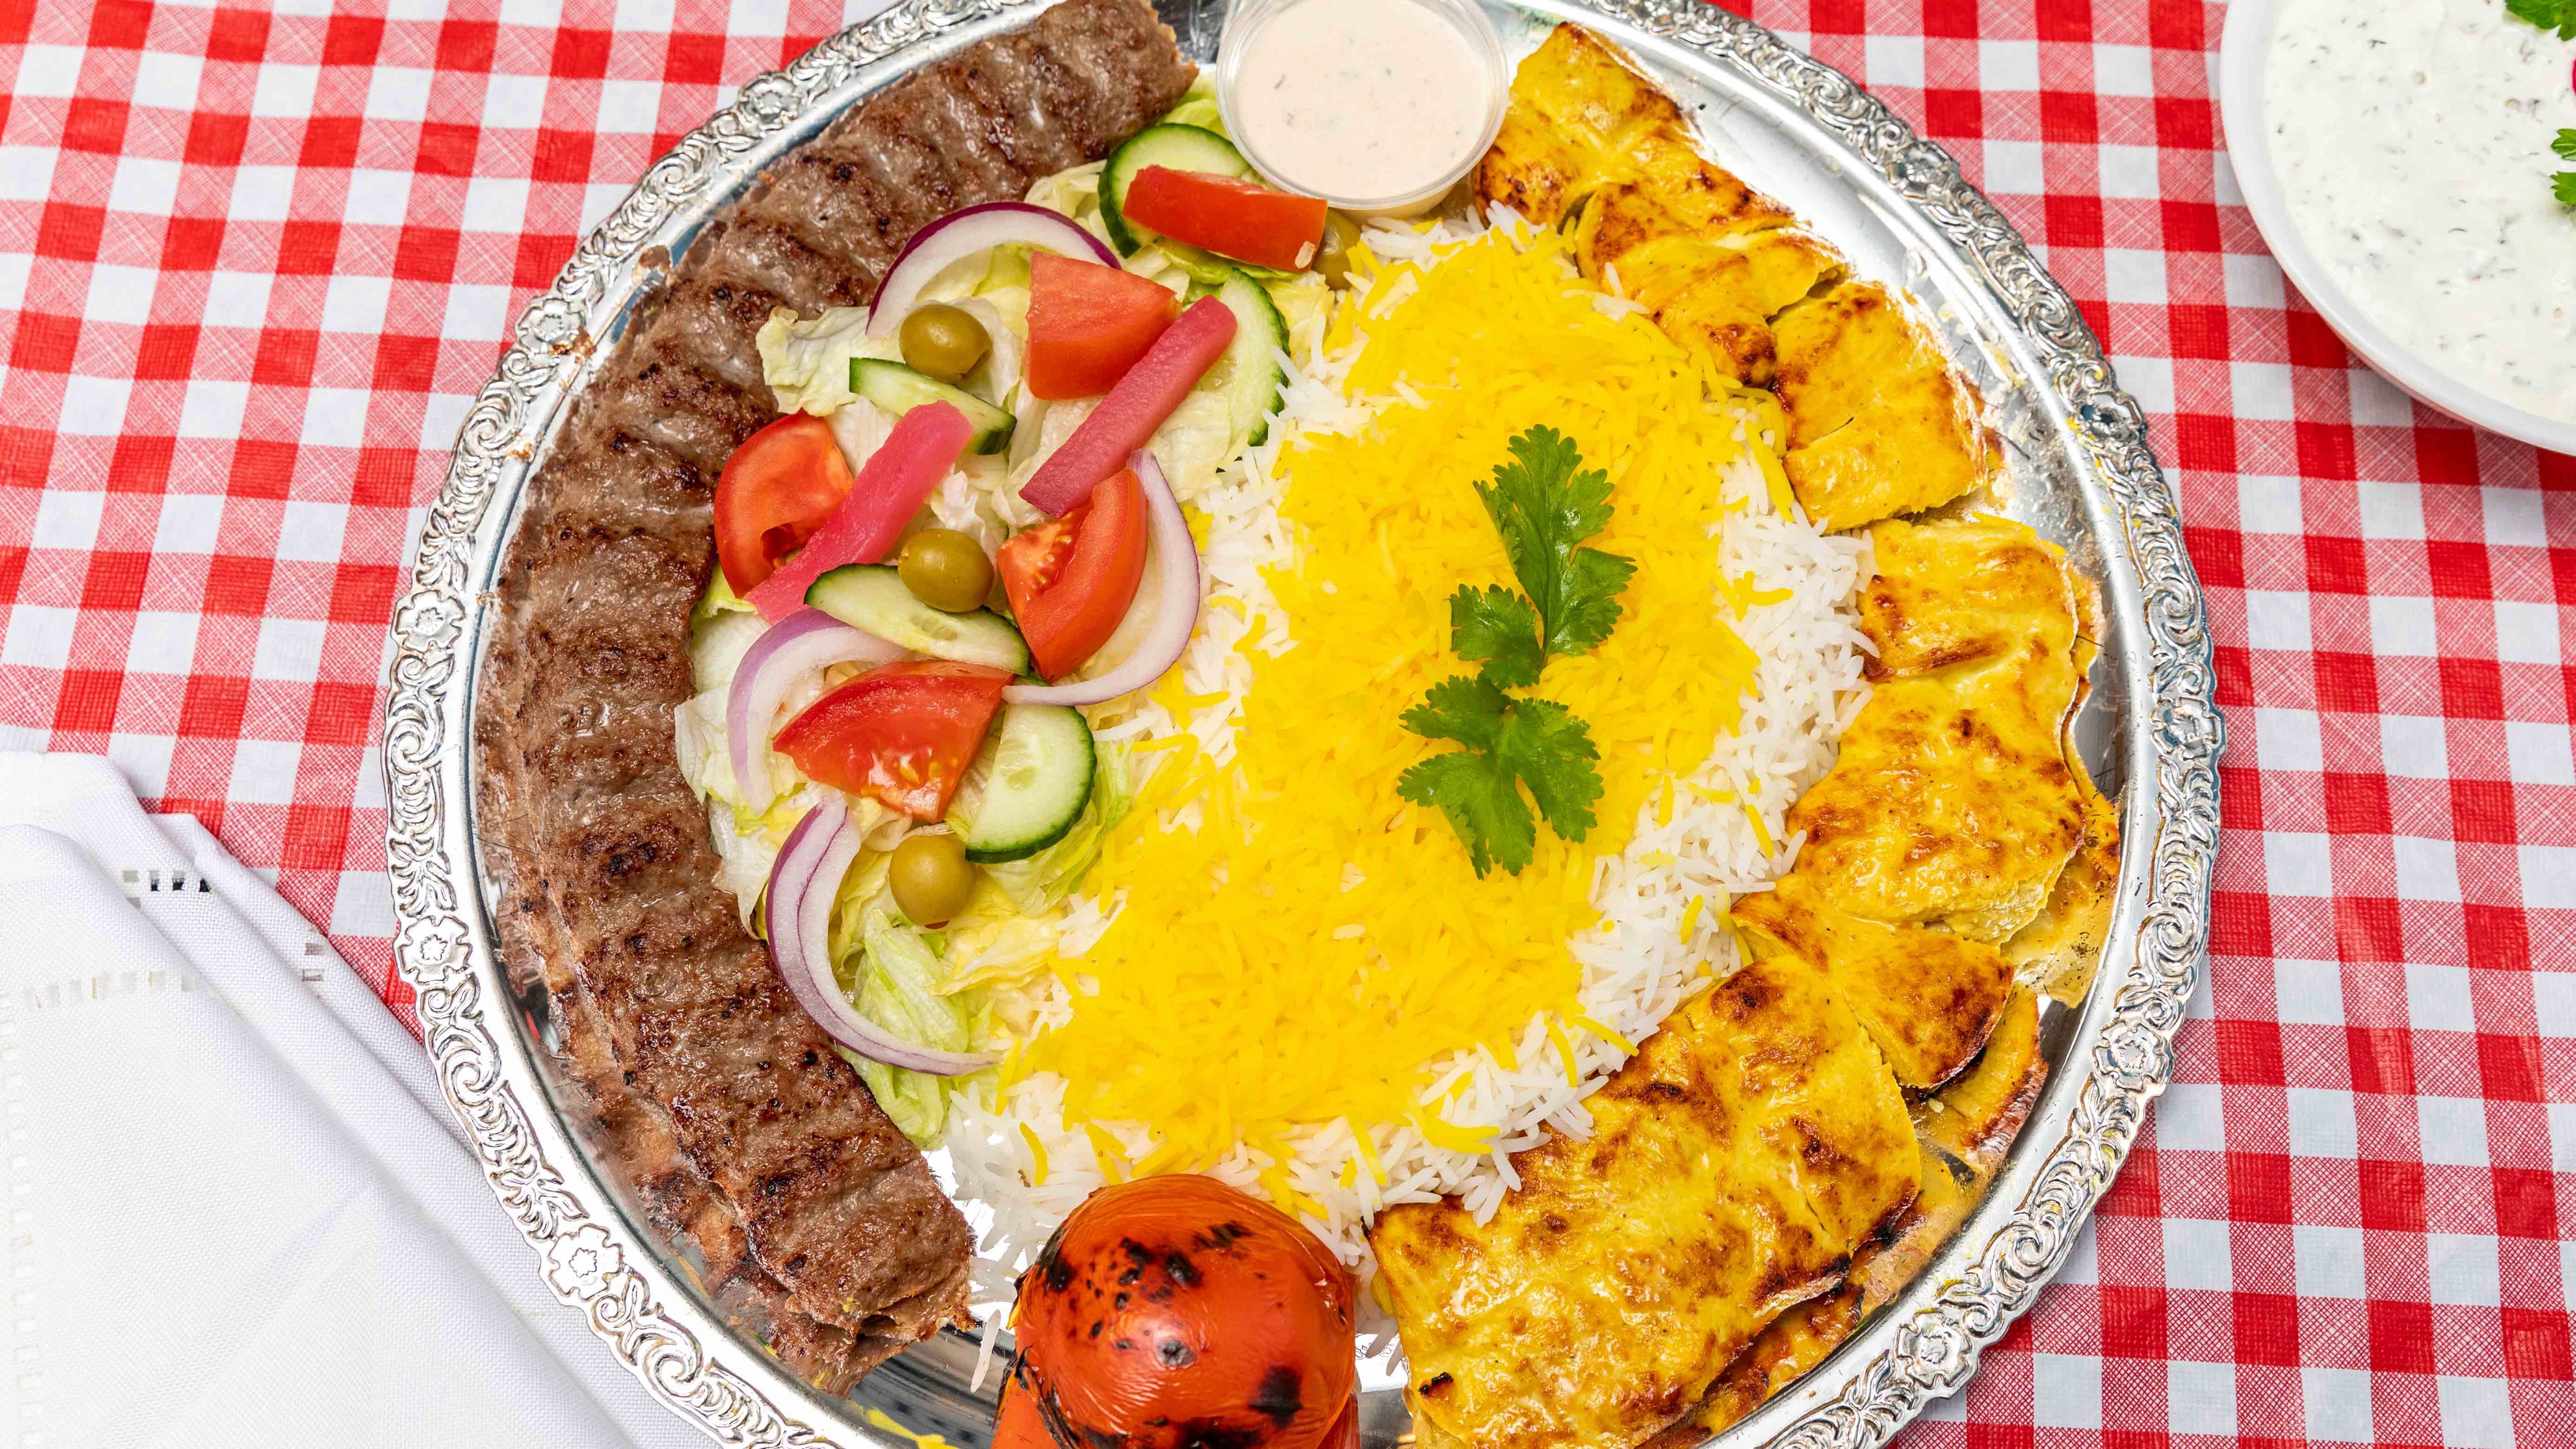 Chicken and Koobideh kebab with rice and salad